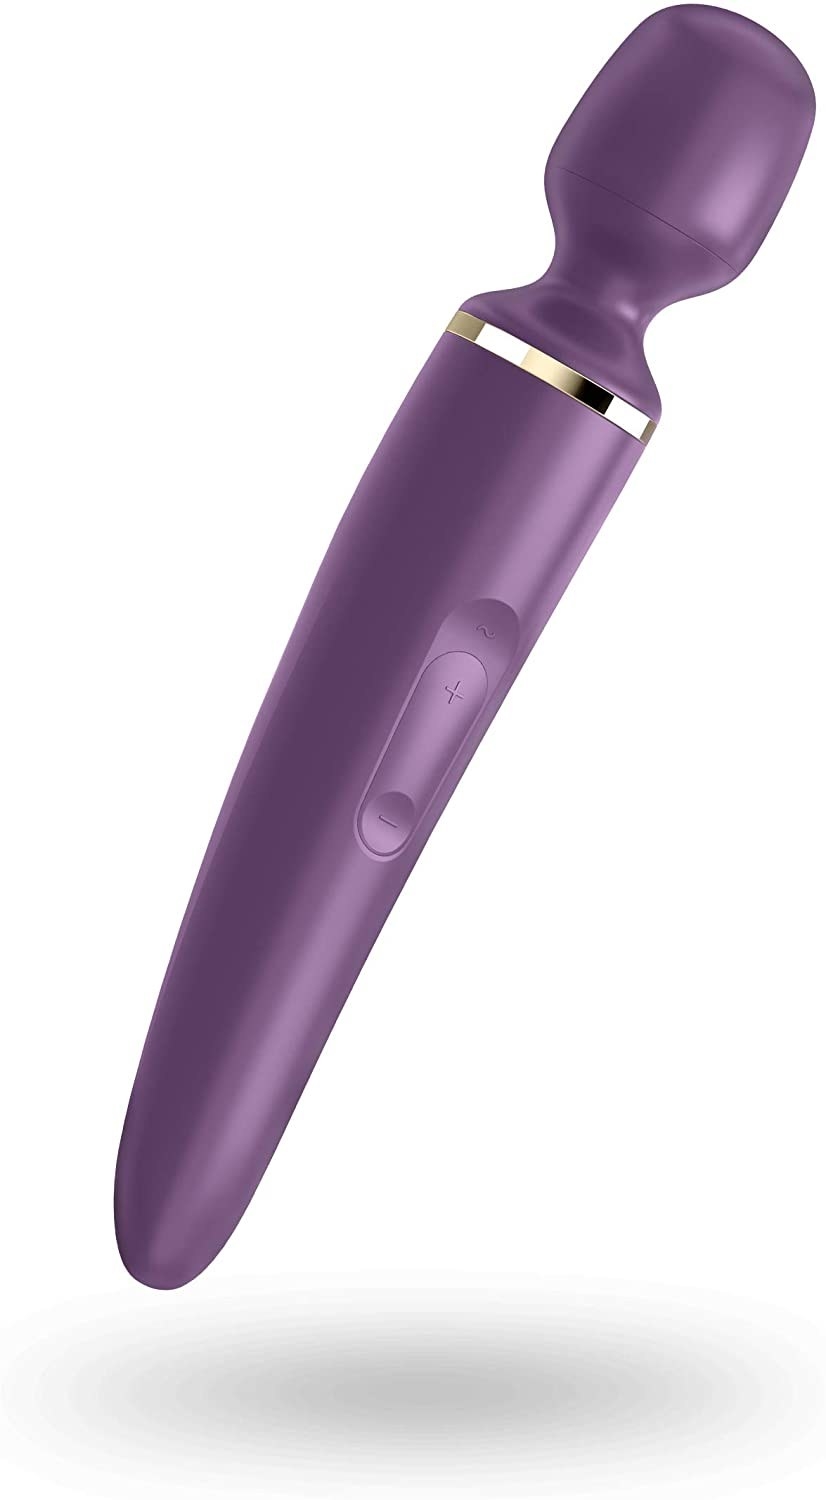 The purple wand